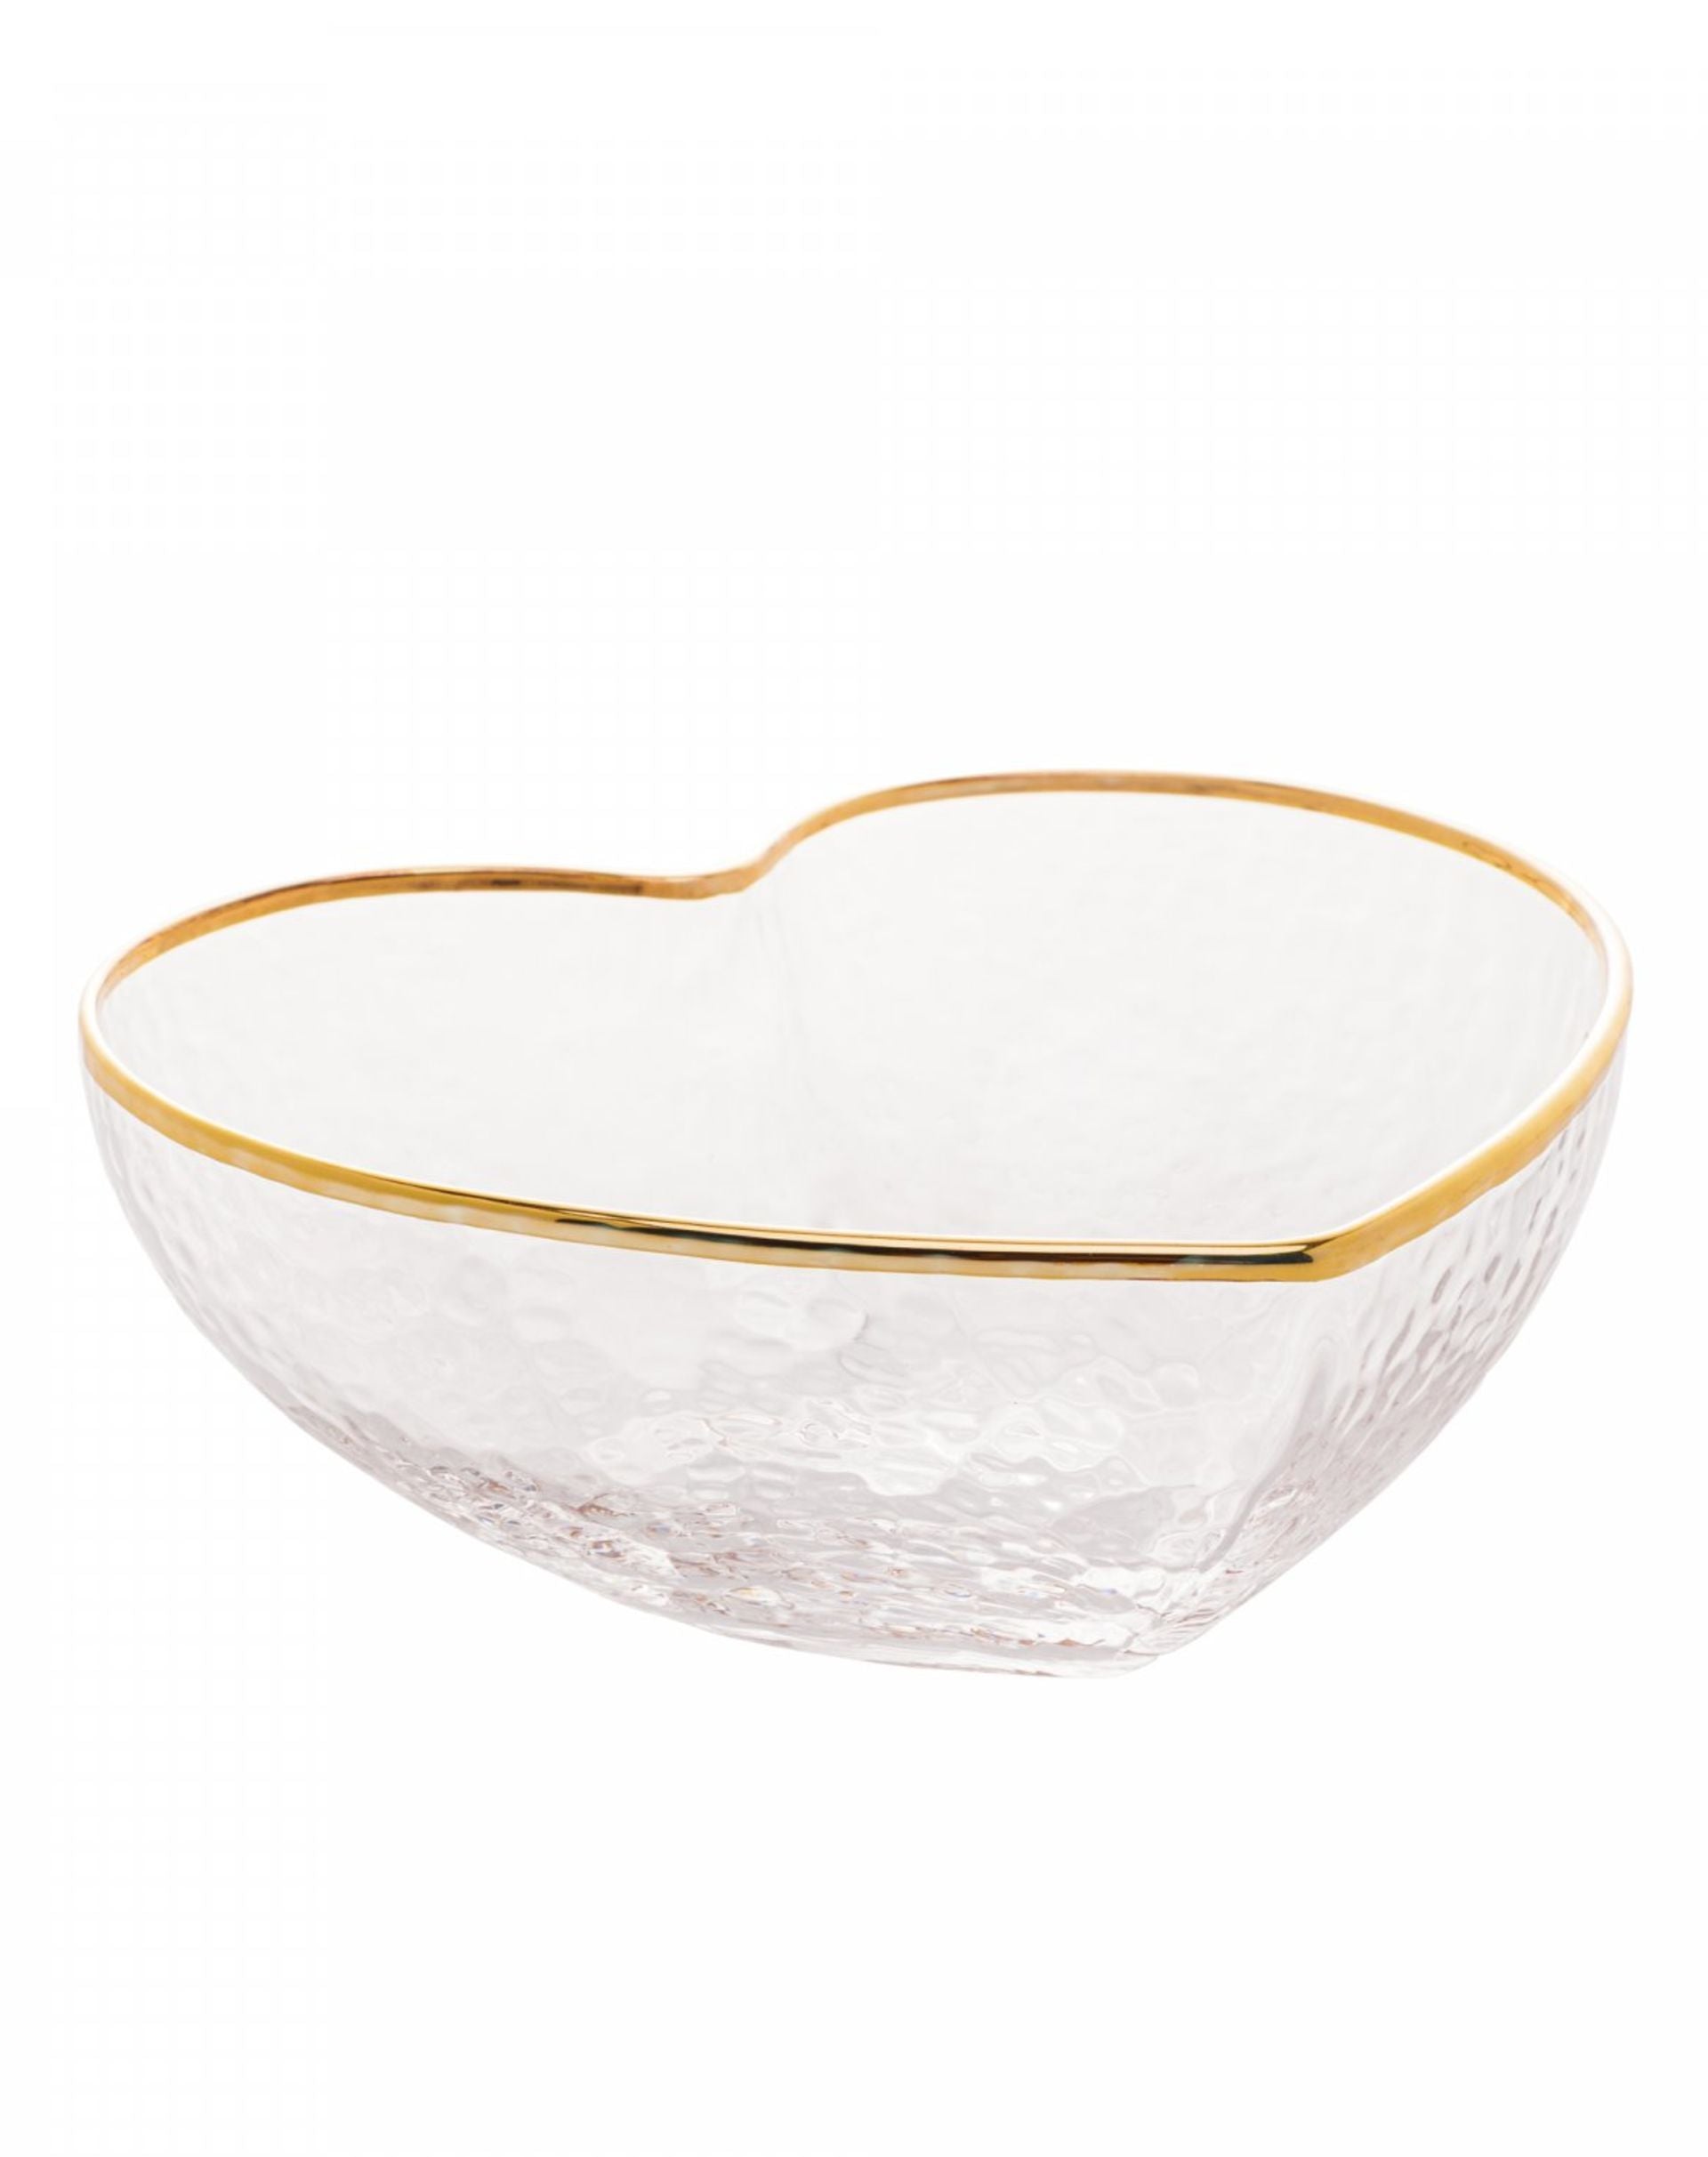 Bowl de Vidro com Borba Dourada Heart 12cm x 11cm x 5cm - Wolff - MULTI COLORIDO